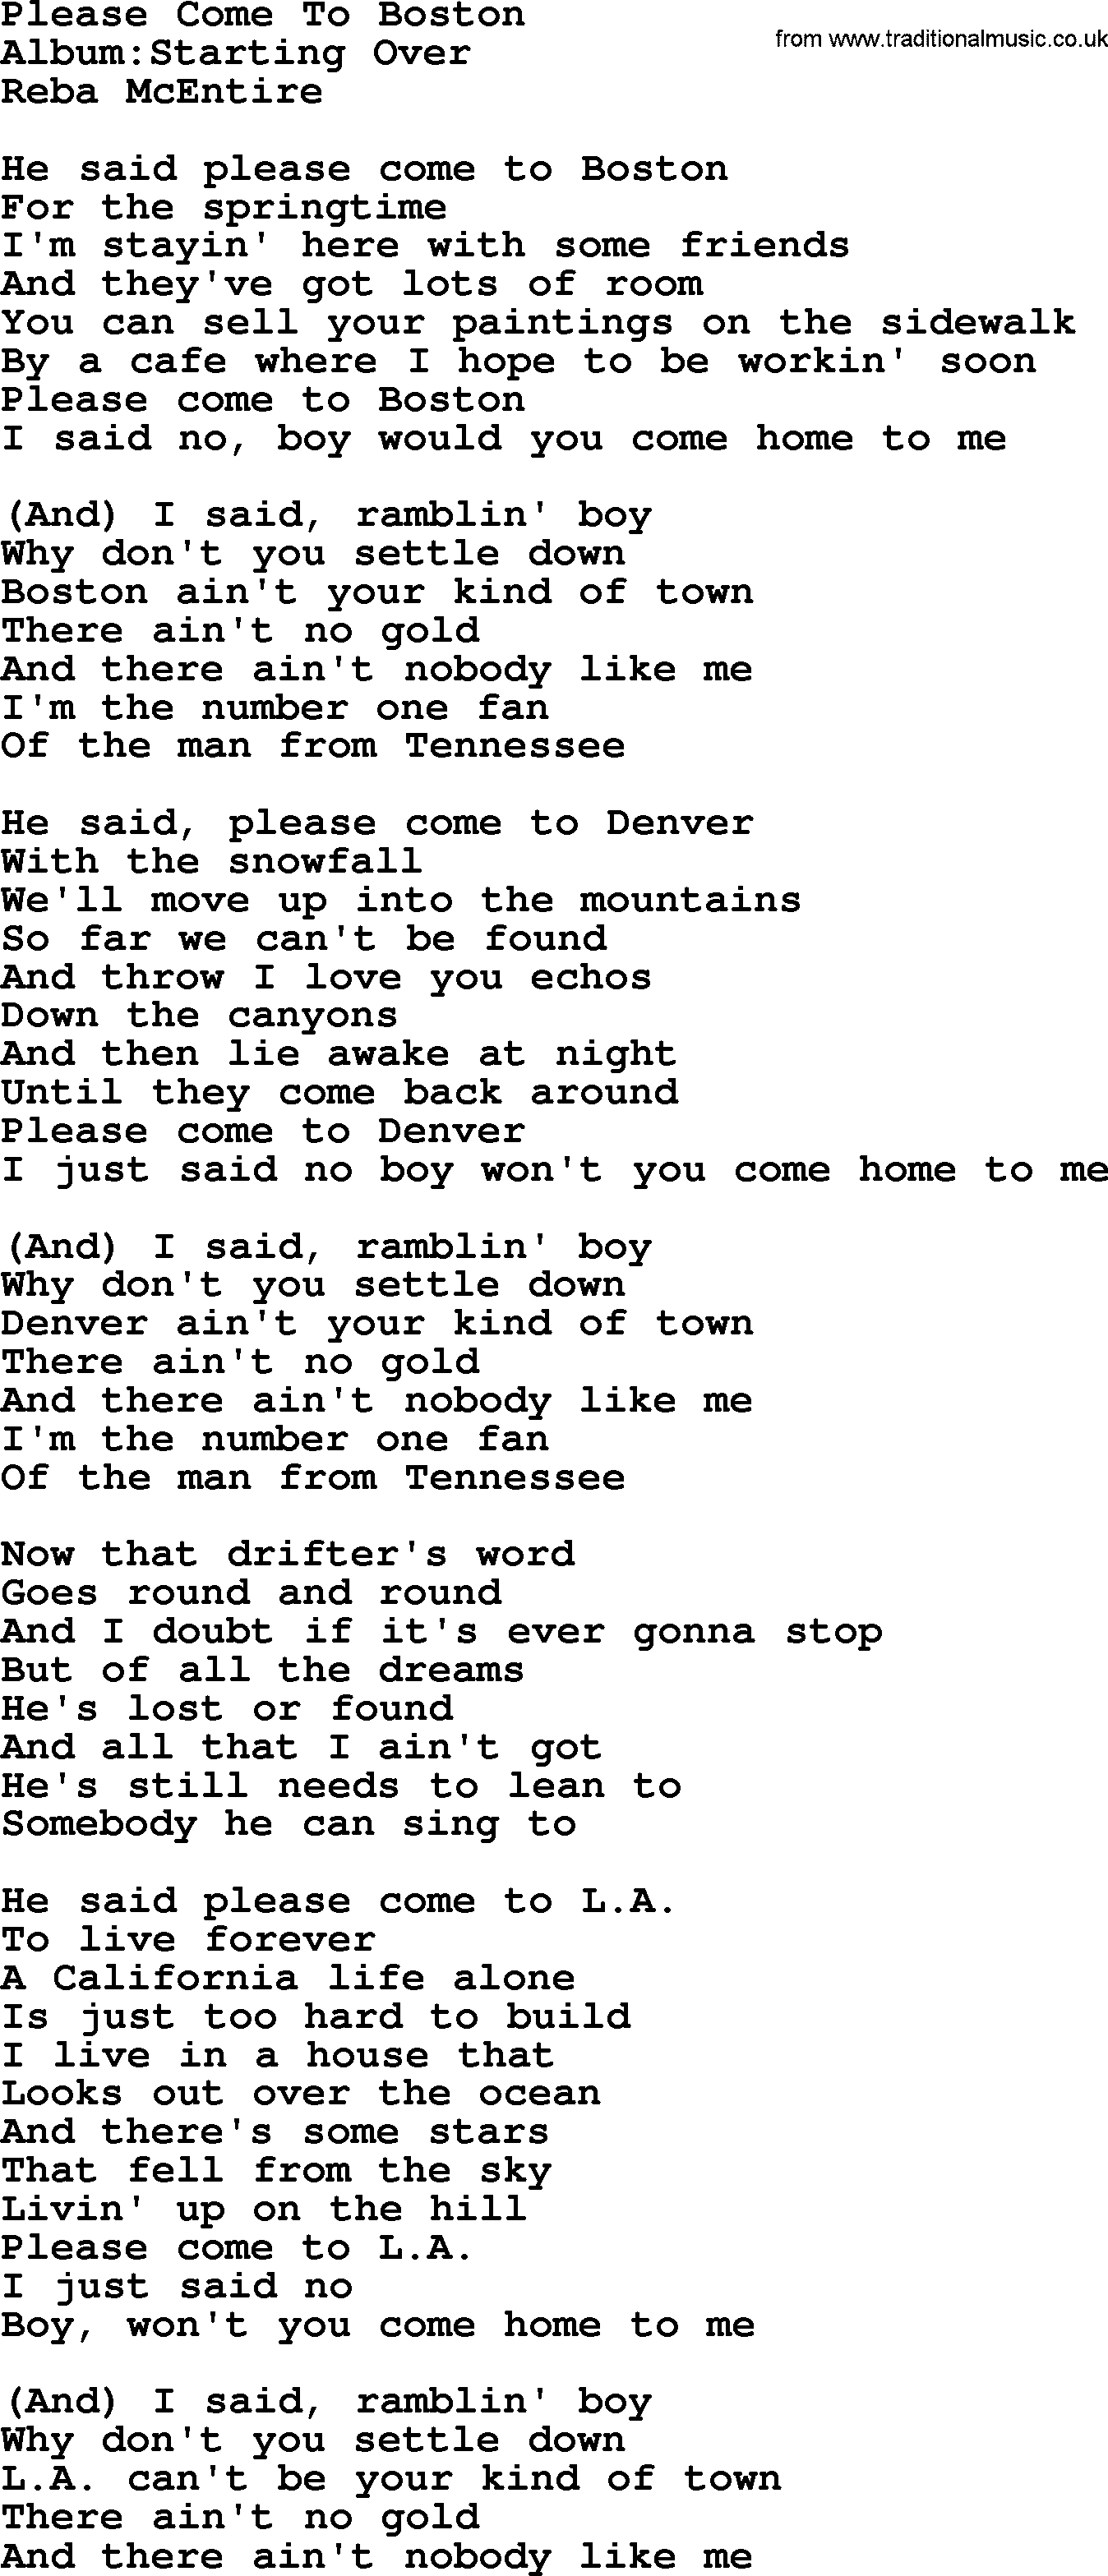 Reba McEntire song: Please Come To Boston lyrics